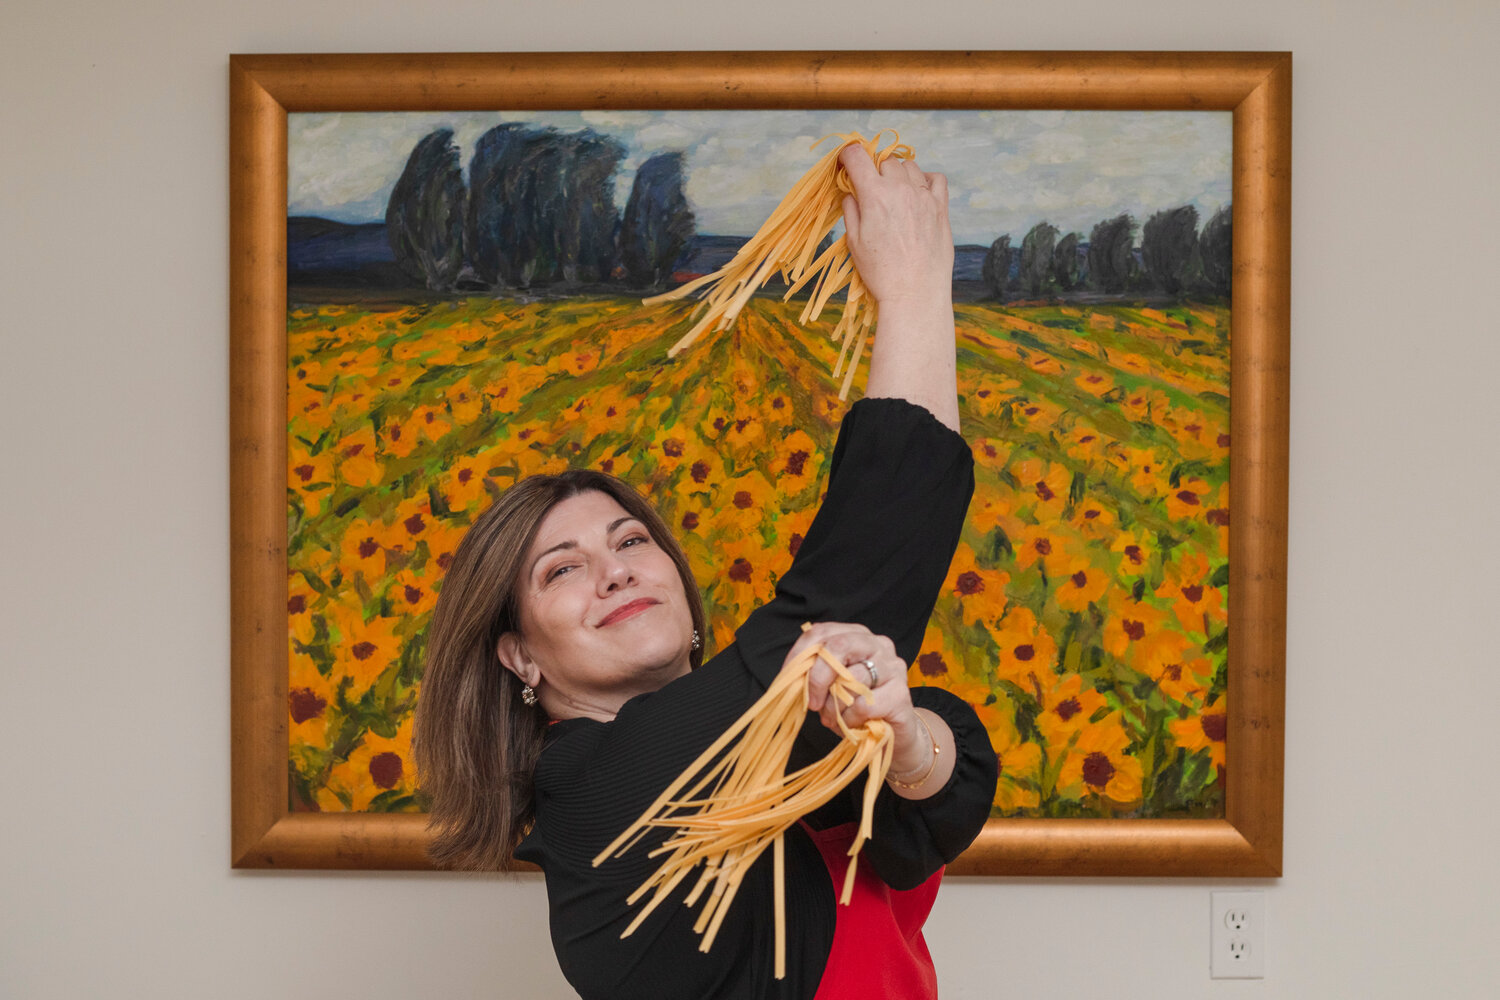 Marilena "Mari" Rutland teaches pasta making classes at Mari’s Italian Cooking Lab in Fairhope.